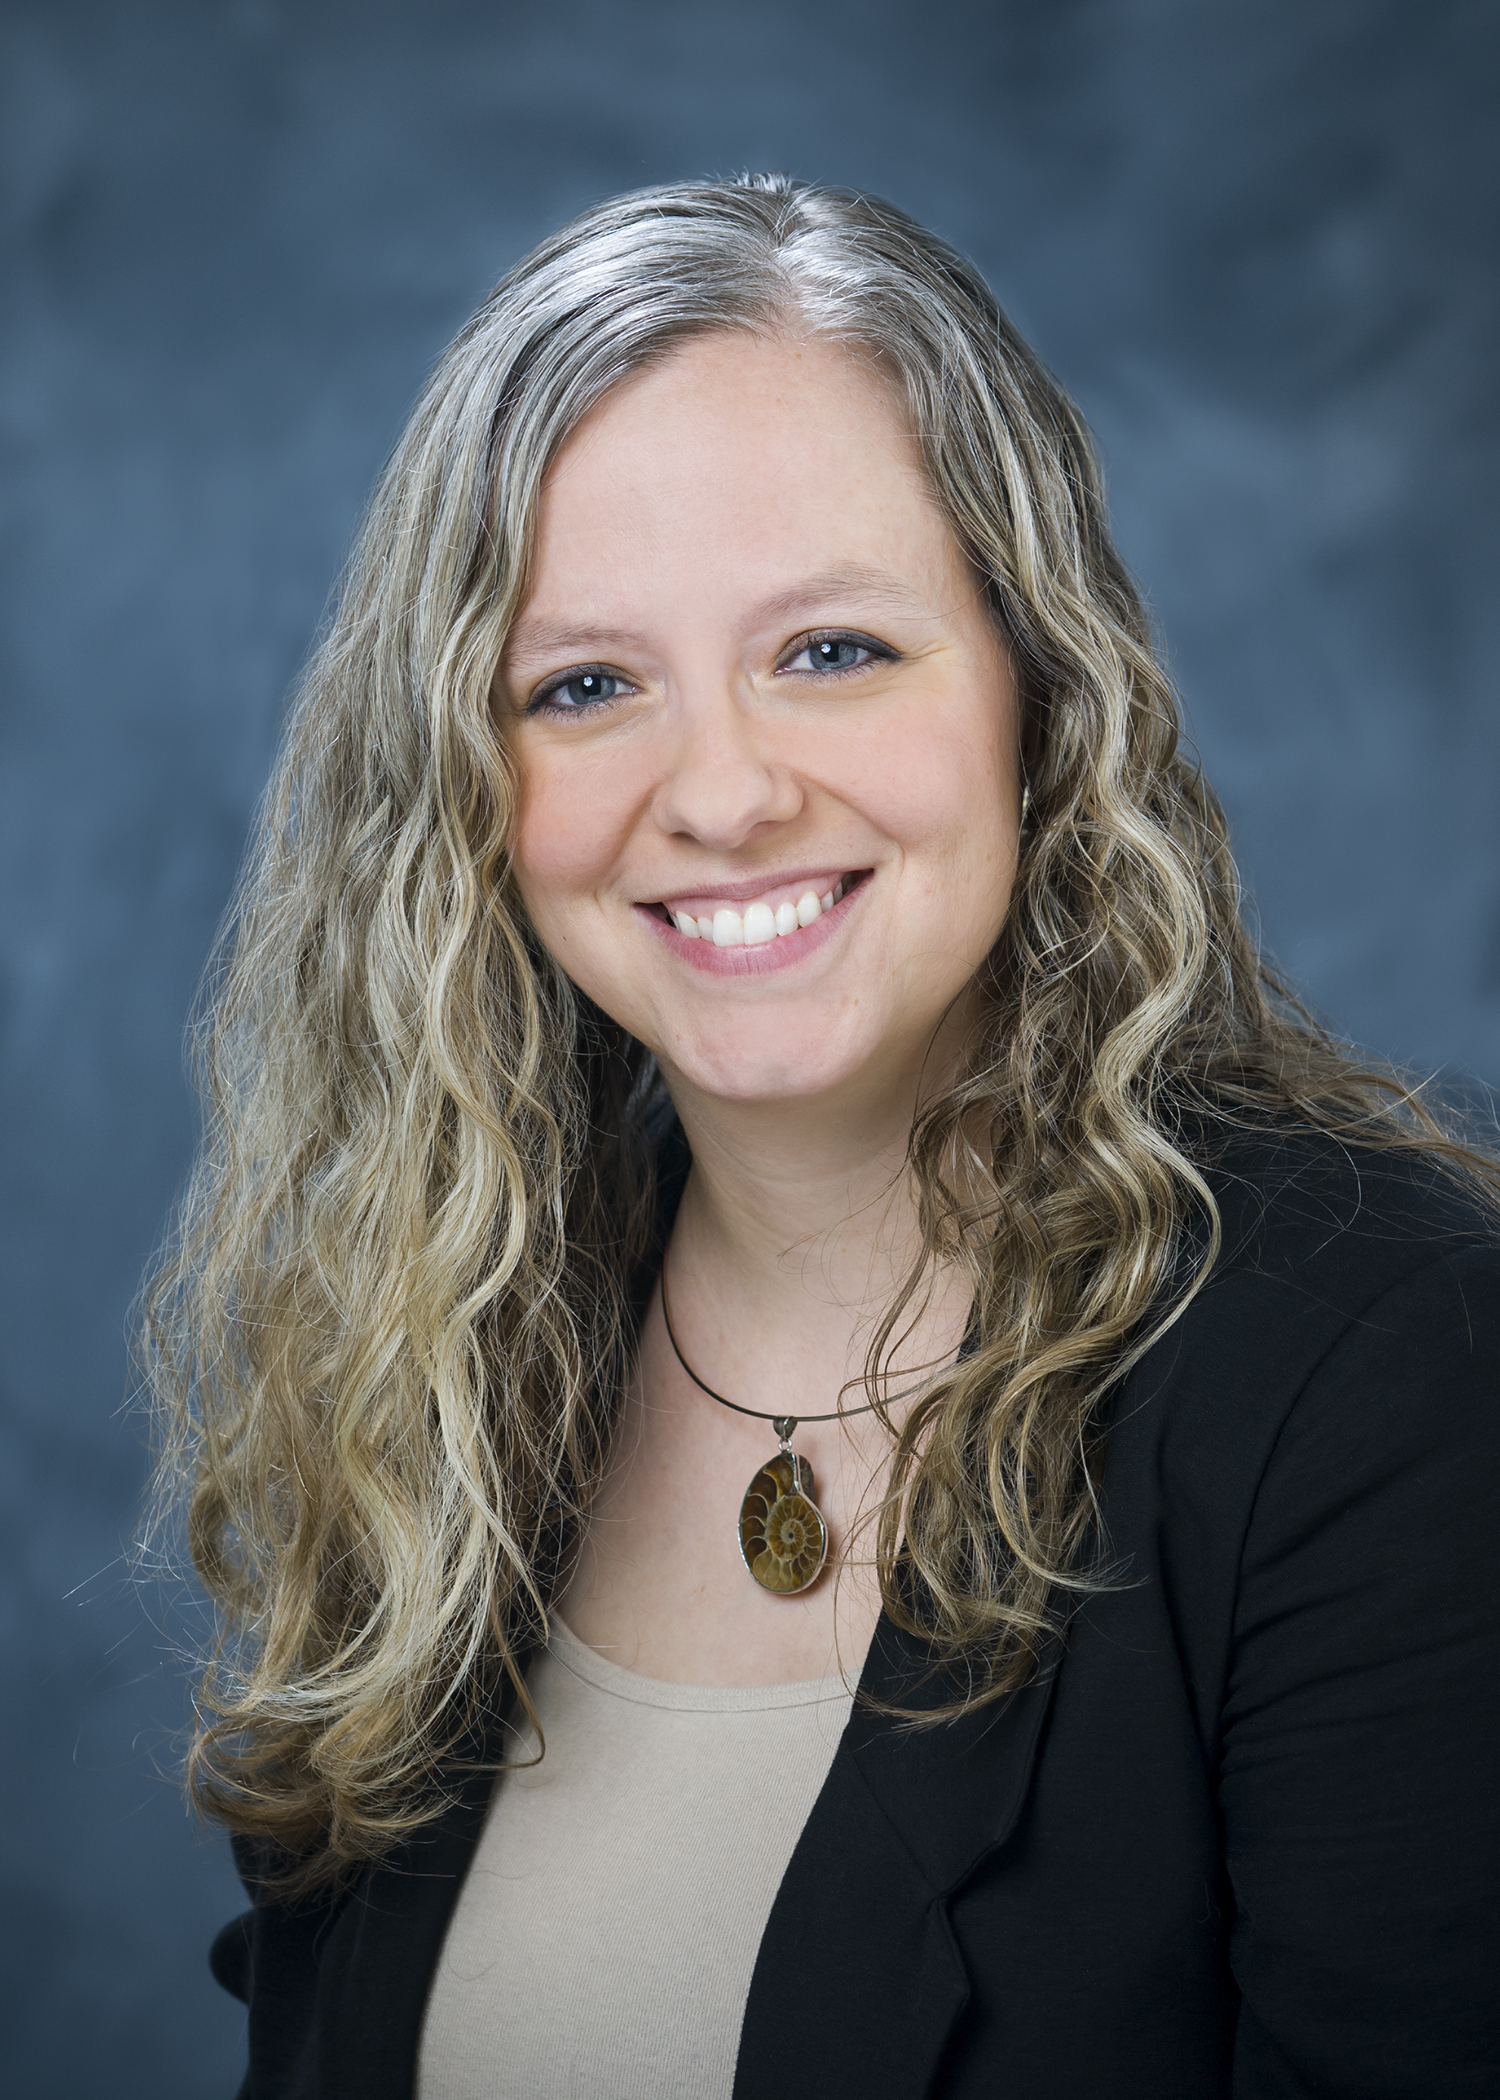 Professional photo of Athena Owen Nagel, wearing a beige shirt and dark blazer against a blue background.